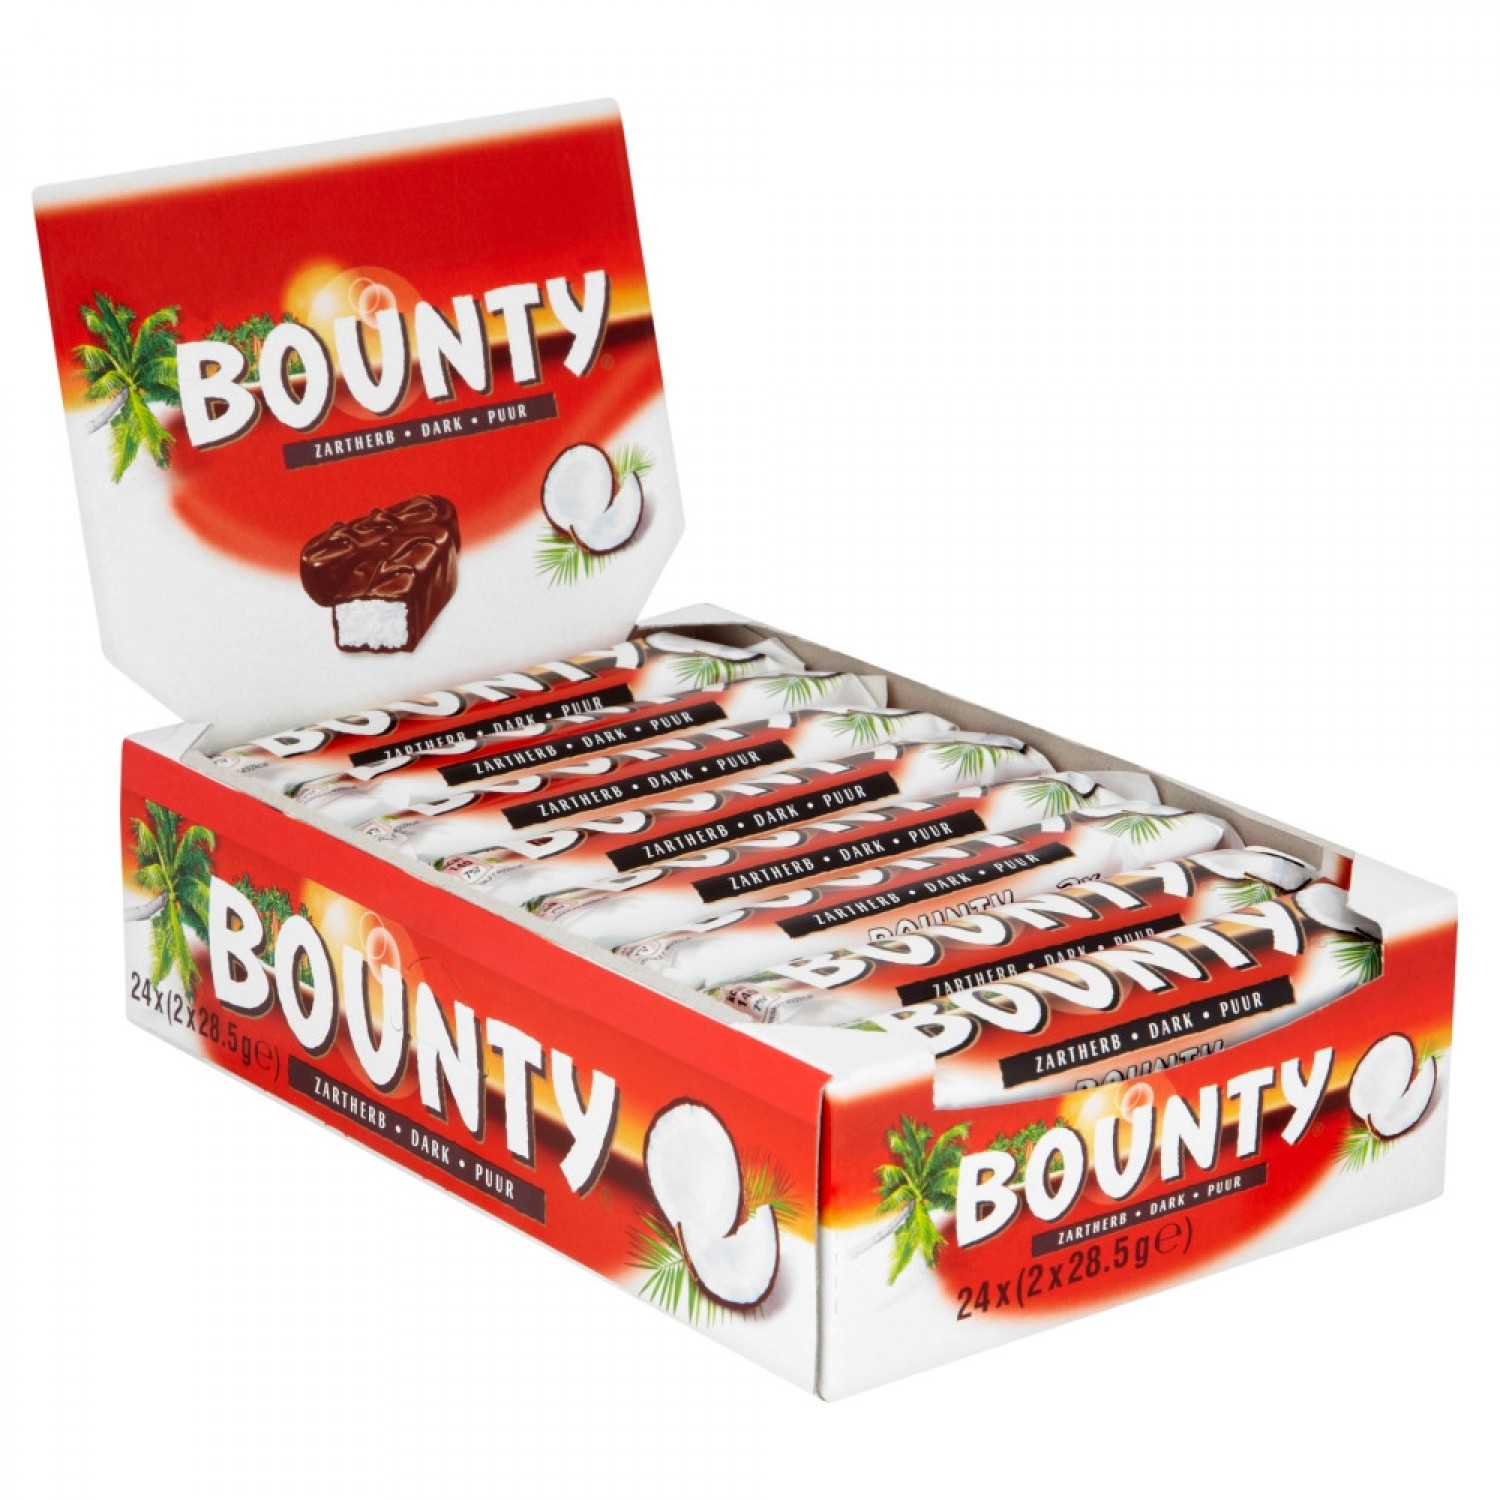 bounty